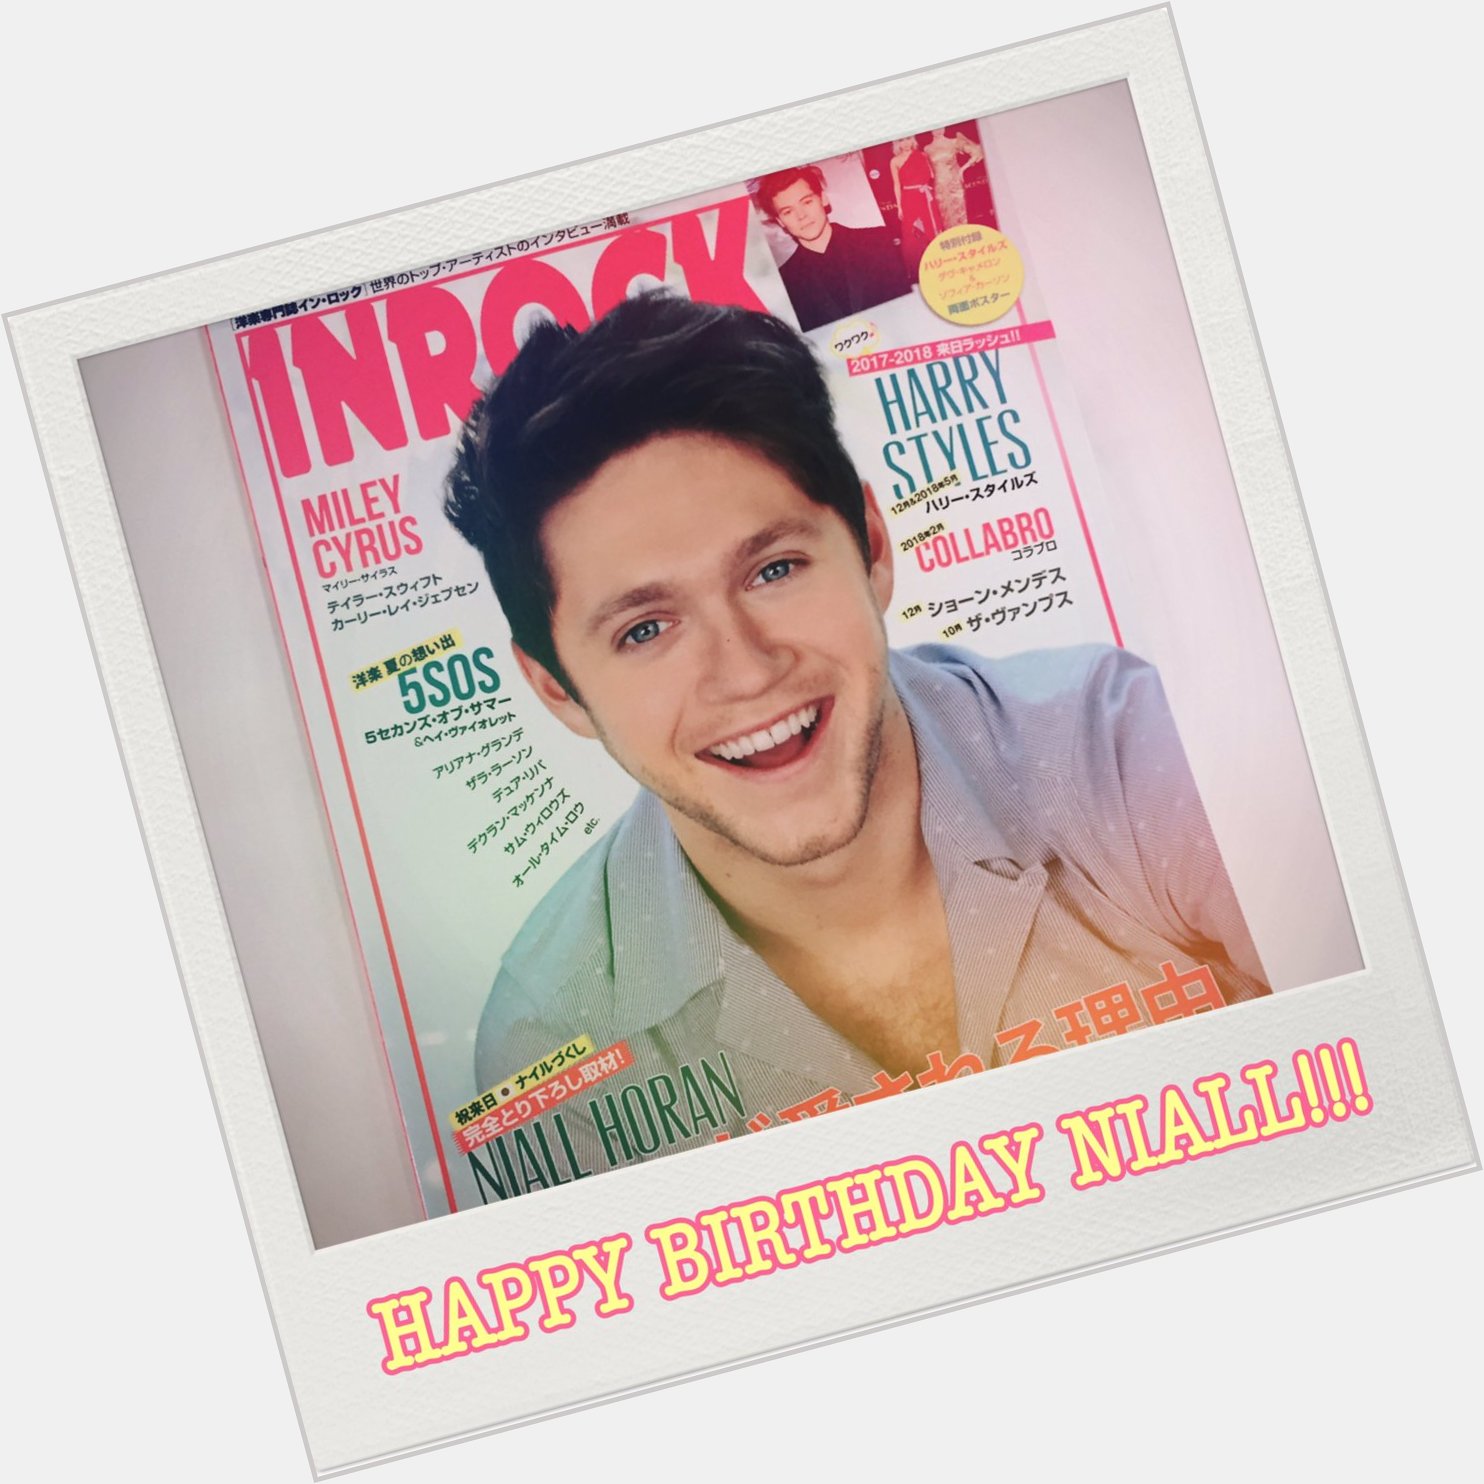          Happy Birthday Niall Horan           